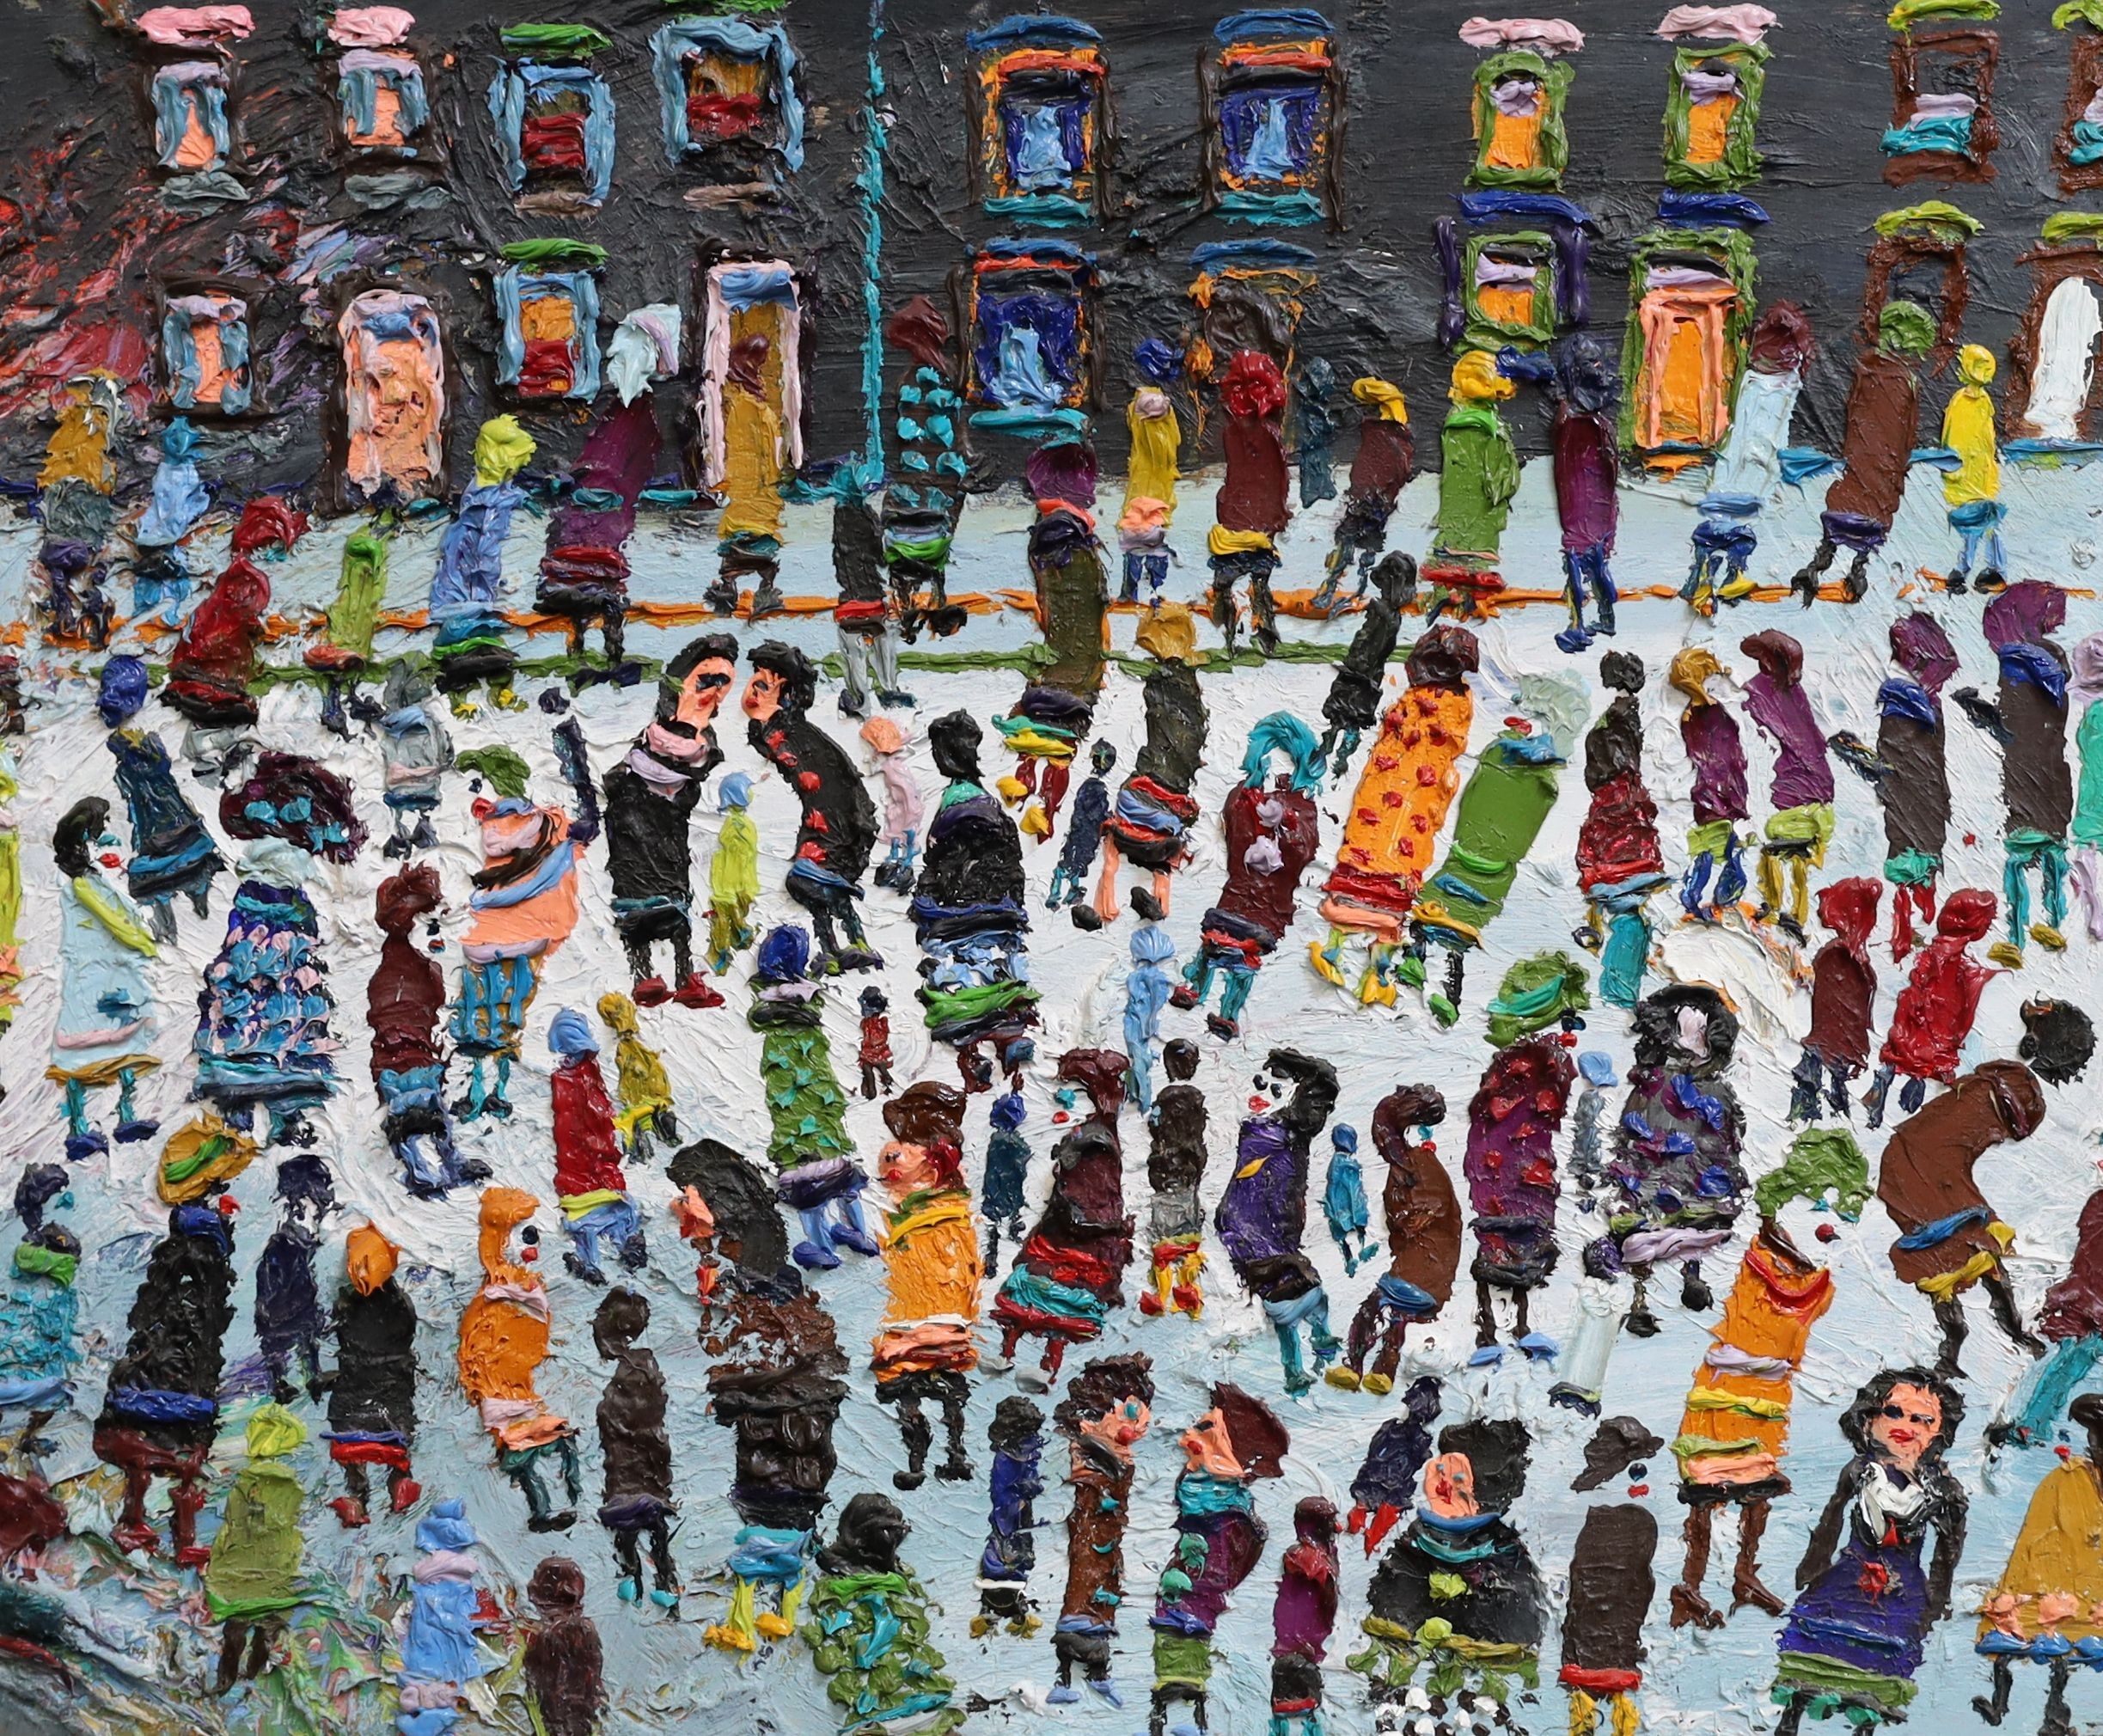 Fred Yates (1922-2008), Crowded street scene, oil on board, 49 x 59cm